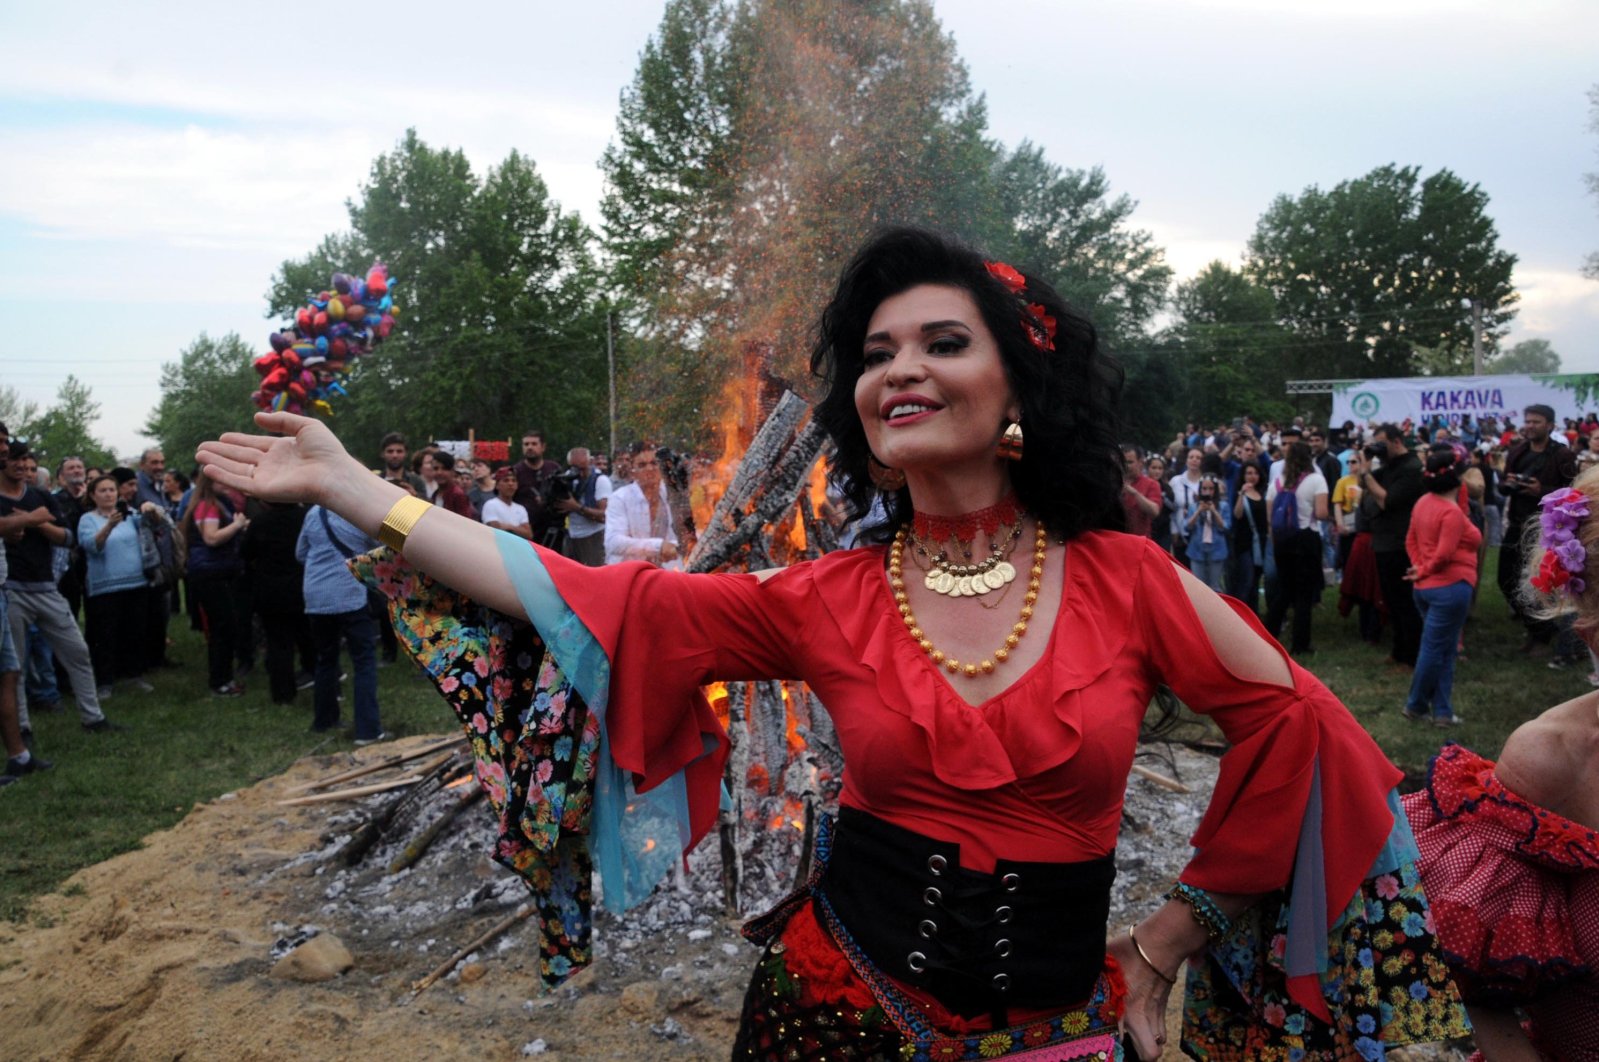 A Romani woman dances at the Kakava Festival in Edirne, northwestern Türkiye, July 7, 2017. (DHA File Photo)